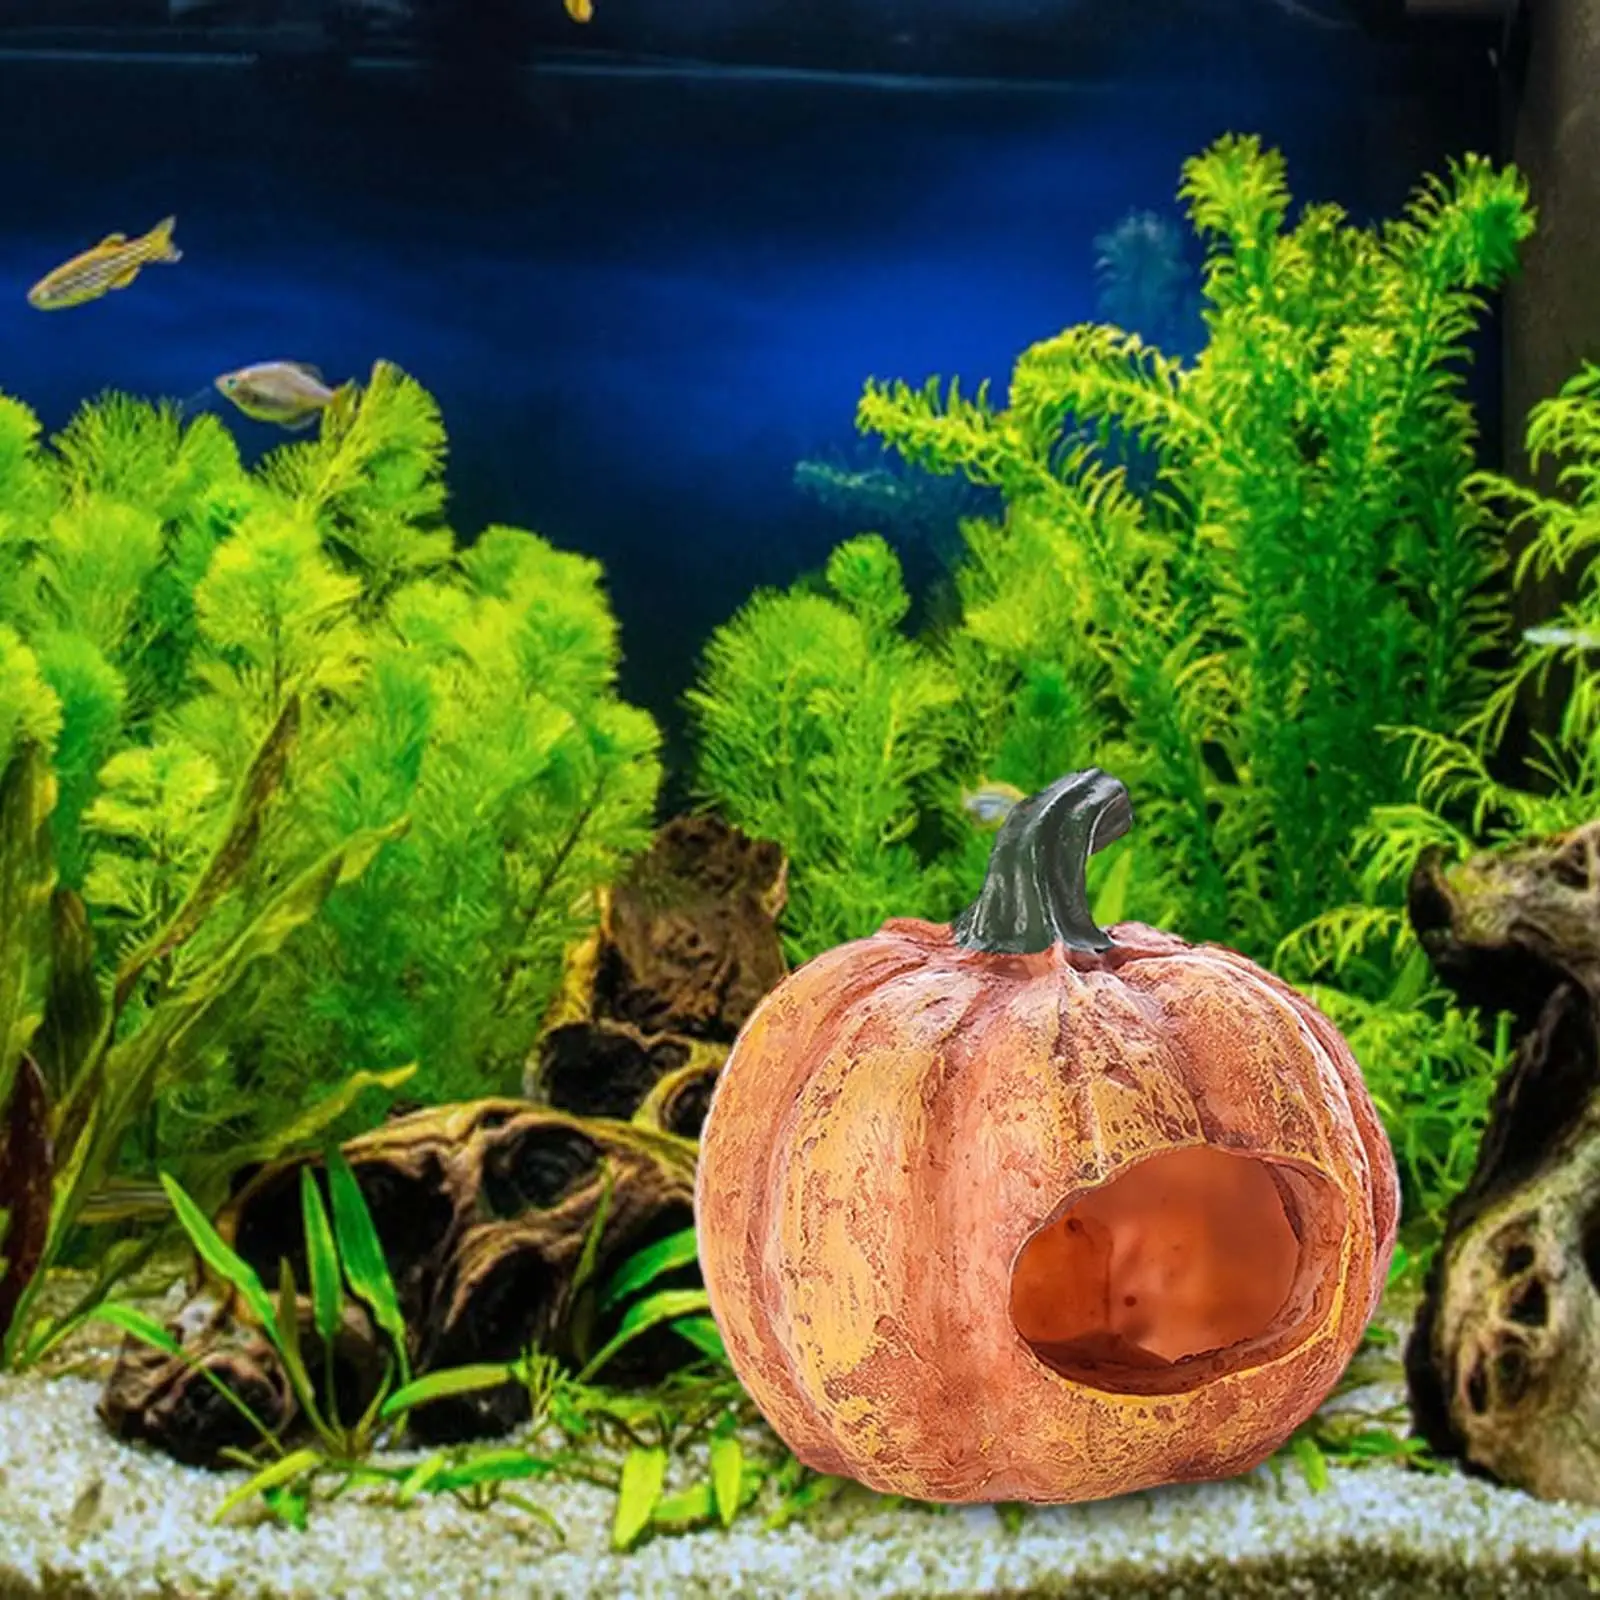 Pumpkin Fish Tank Decor Simulation Pumpkin Shelter Durable Artificial Landscaping for Aquarium Living Room Home Desk Fish Tank